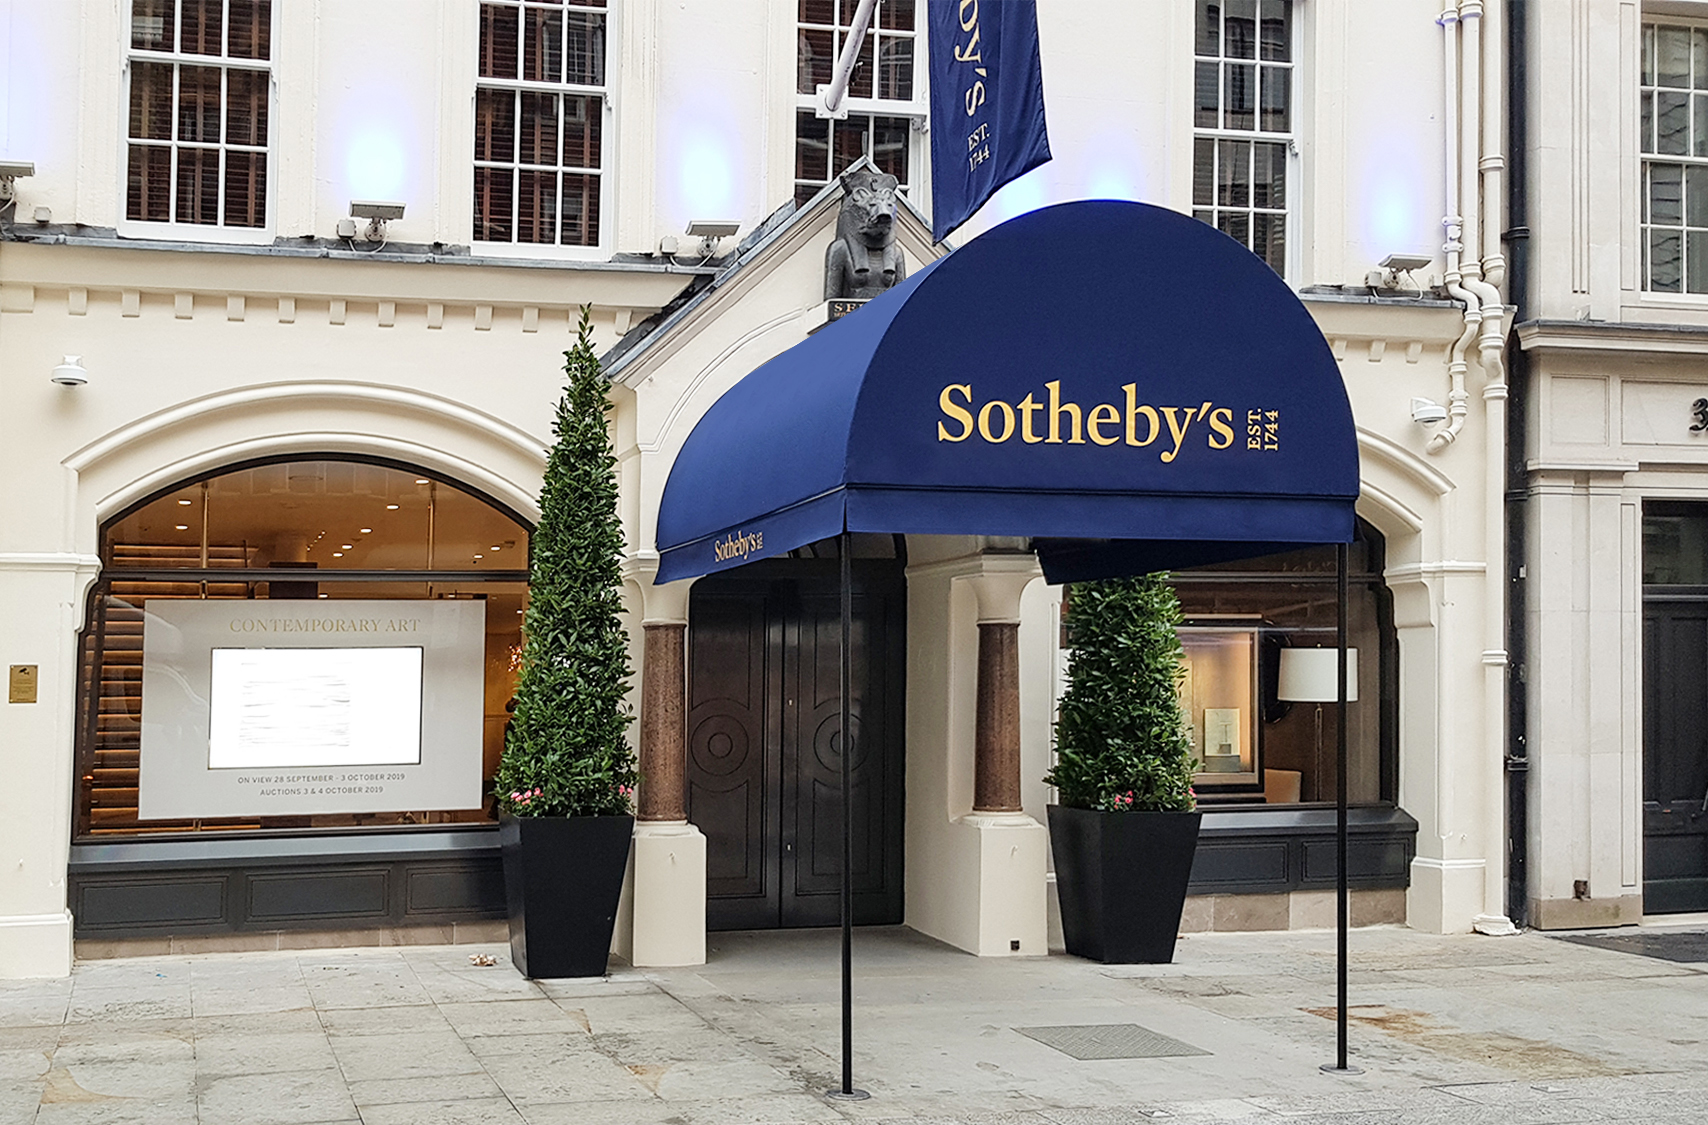 Sotheby's entrance canopy